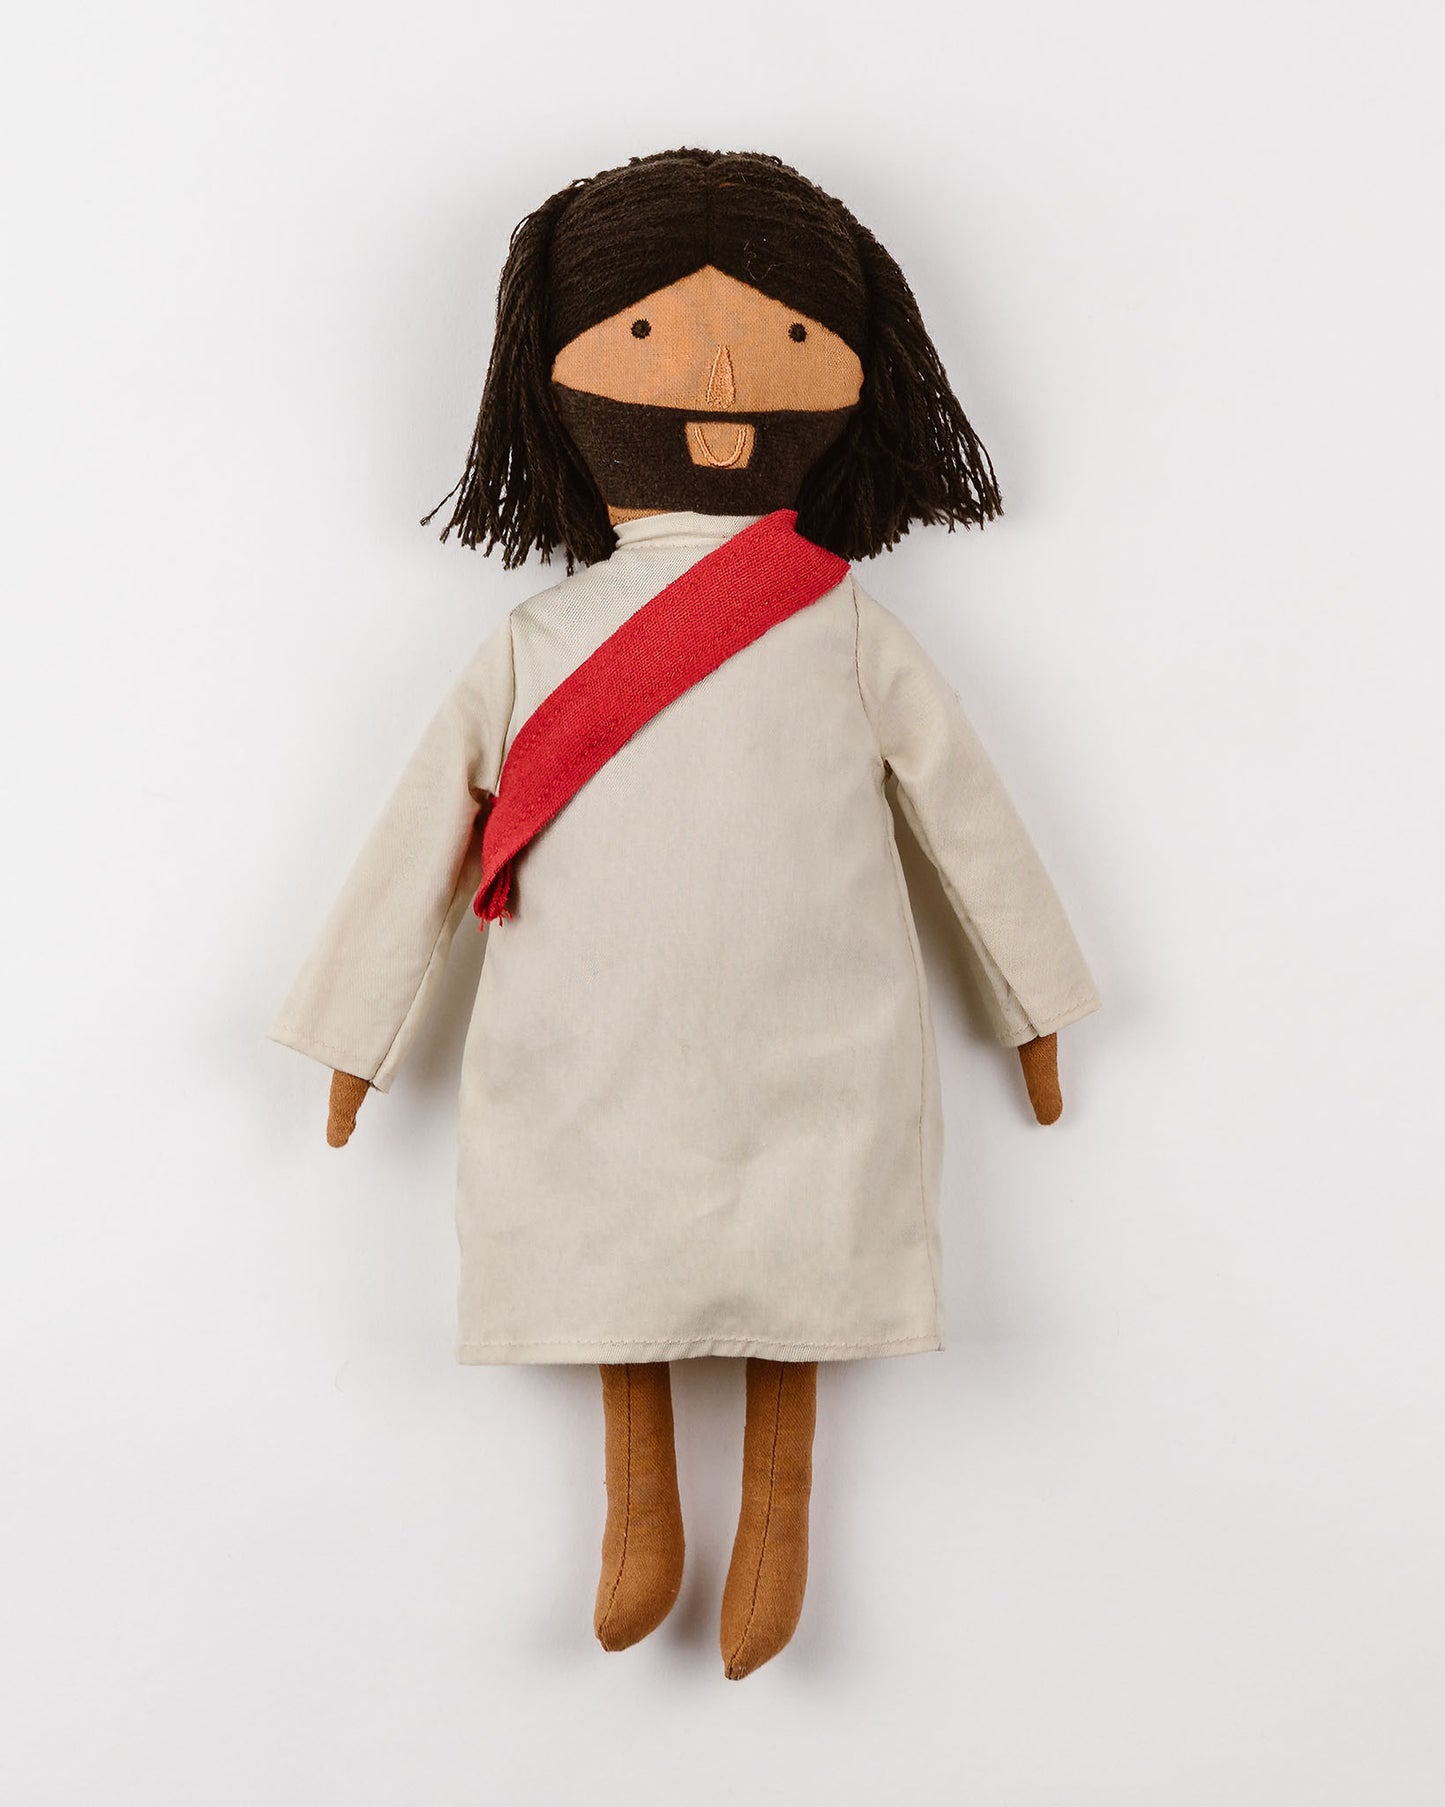 Jesus of Nazareth Doll